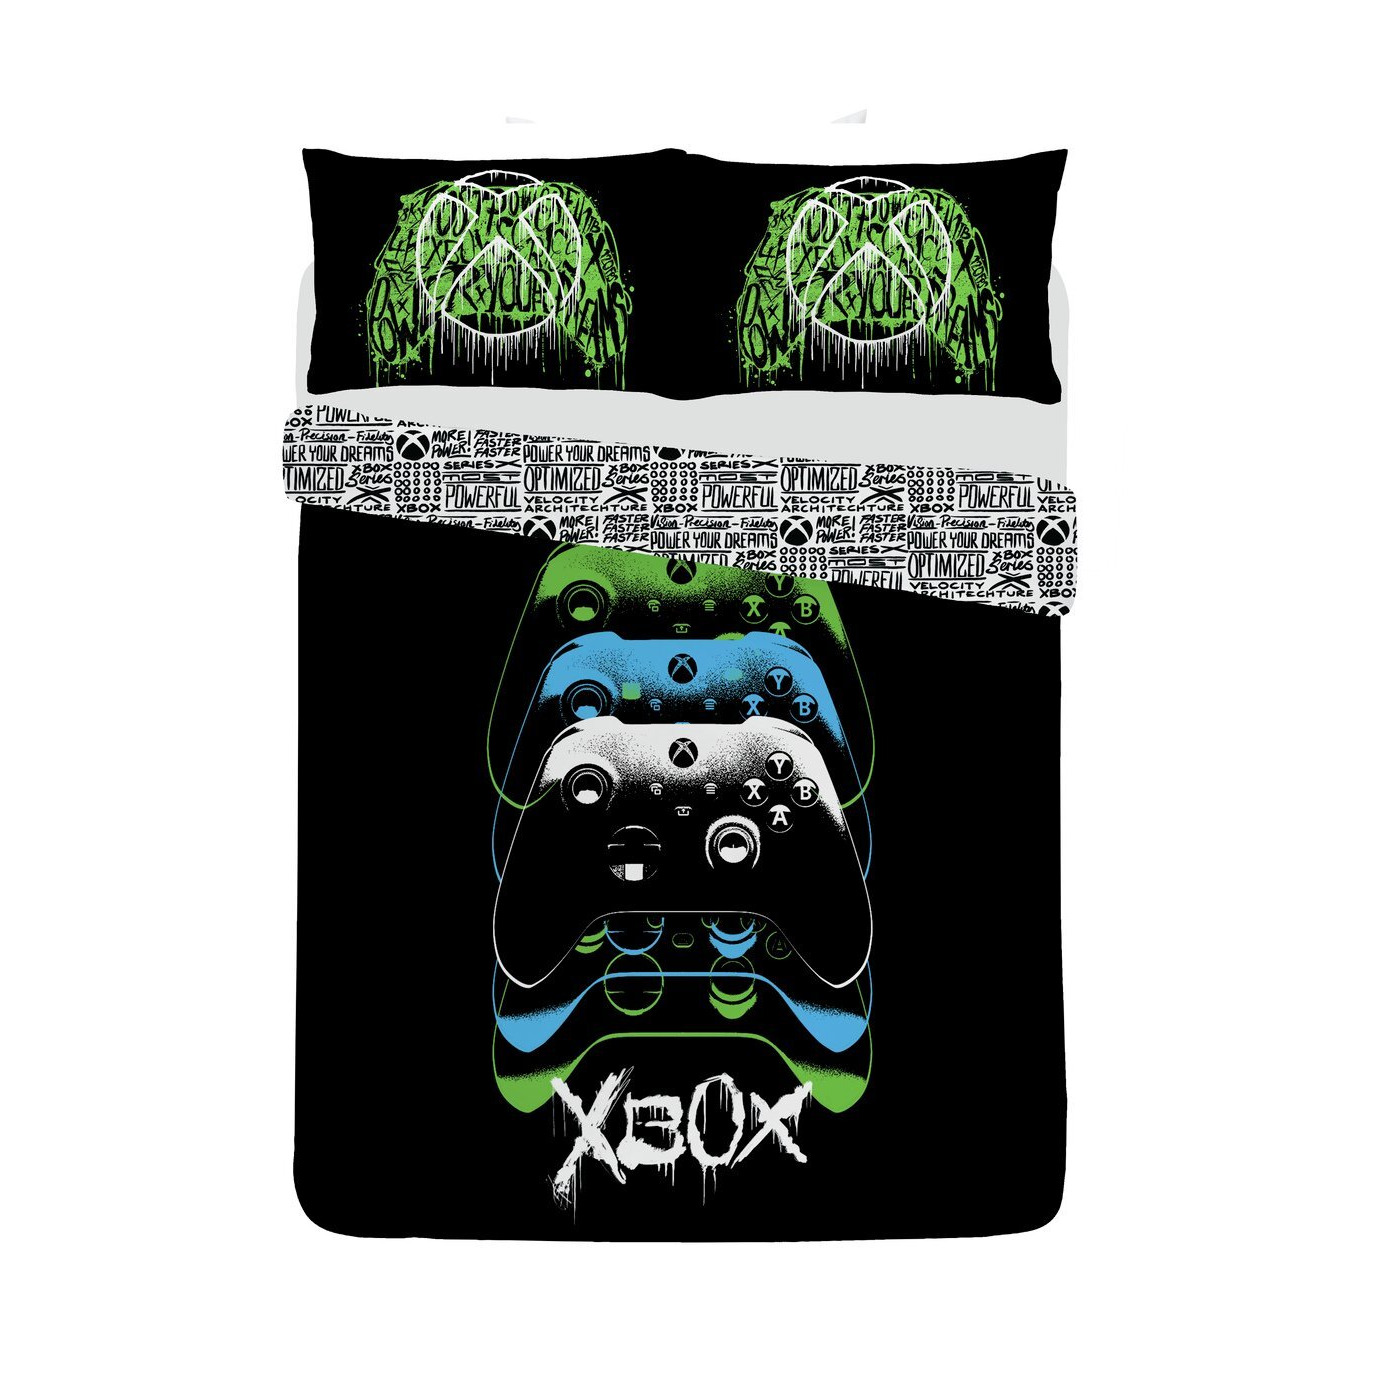 Xbox Black Bedding Set - Double - image 1